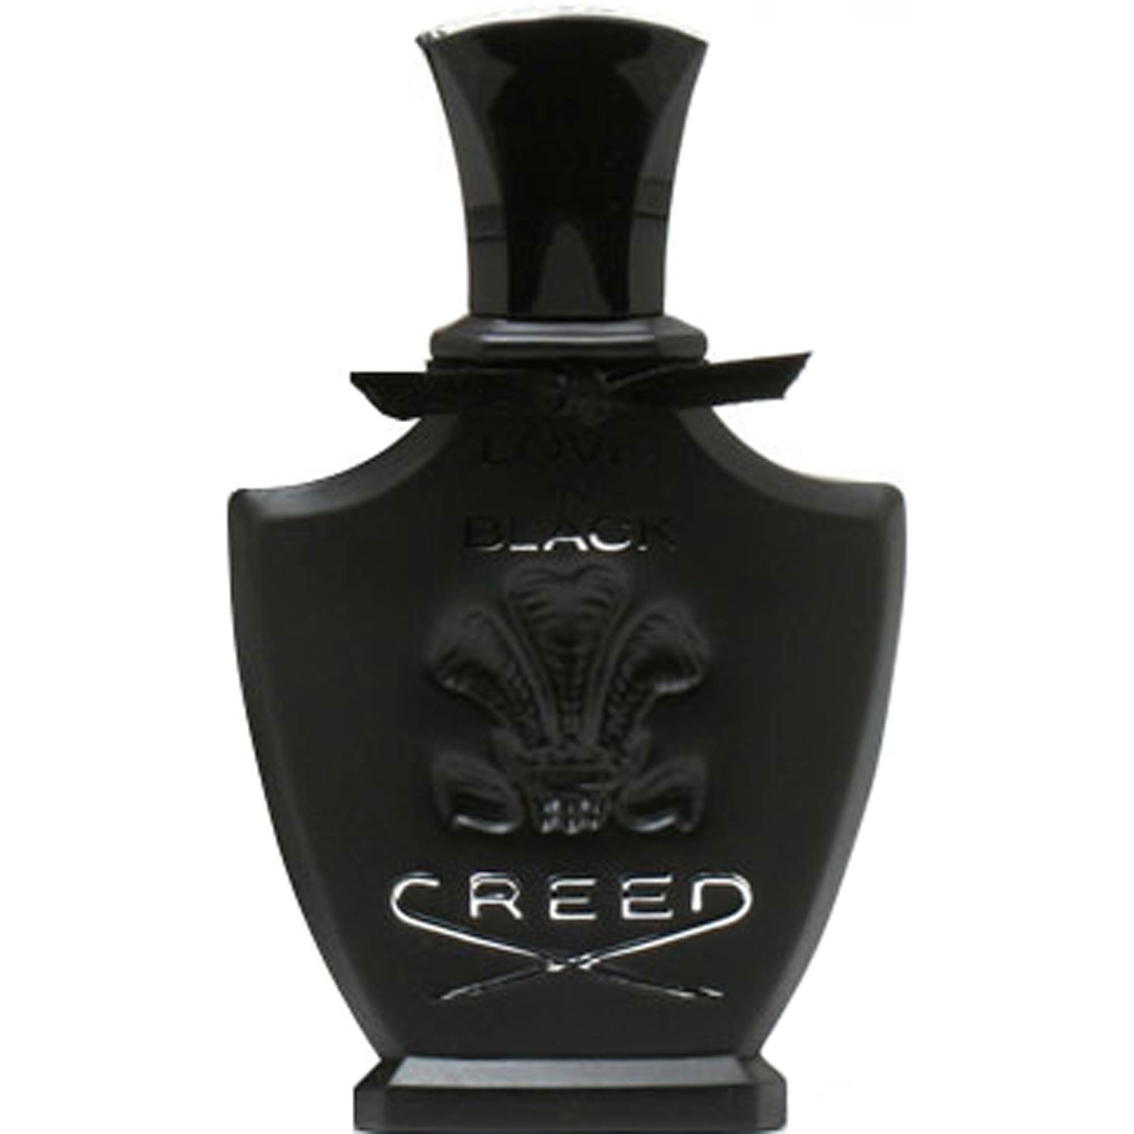 Love in Black by Creed 2.5oz Eau de Parfum Spray Women